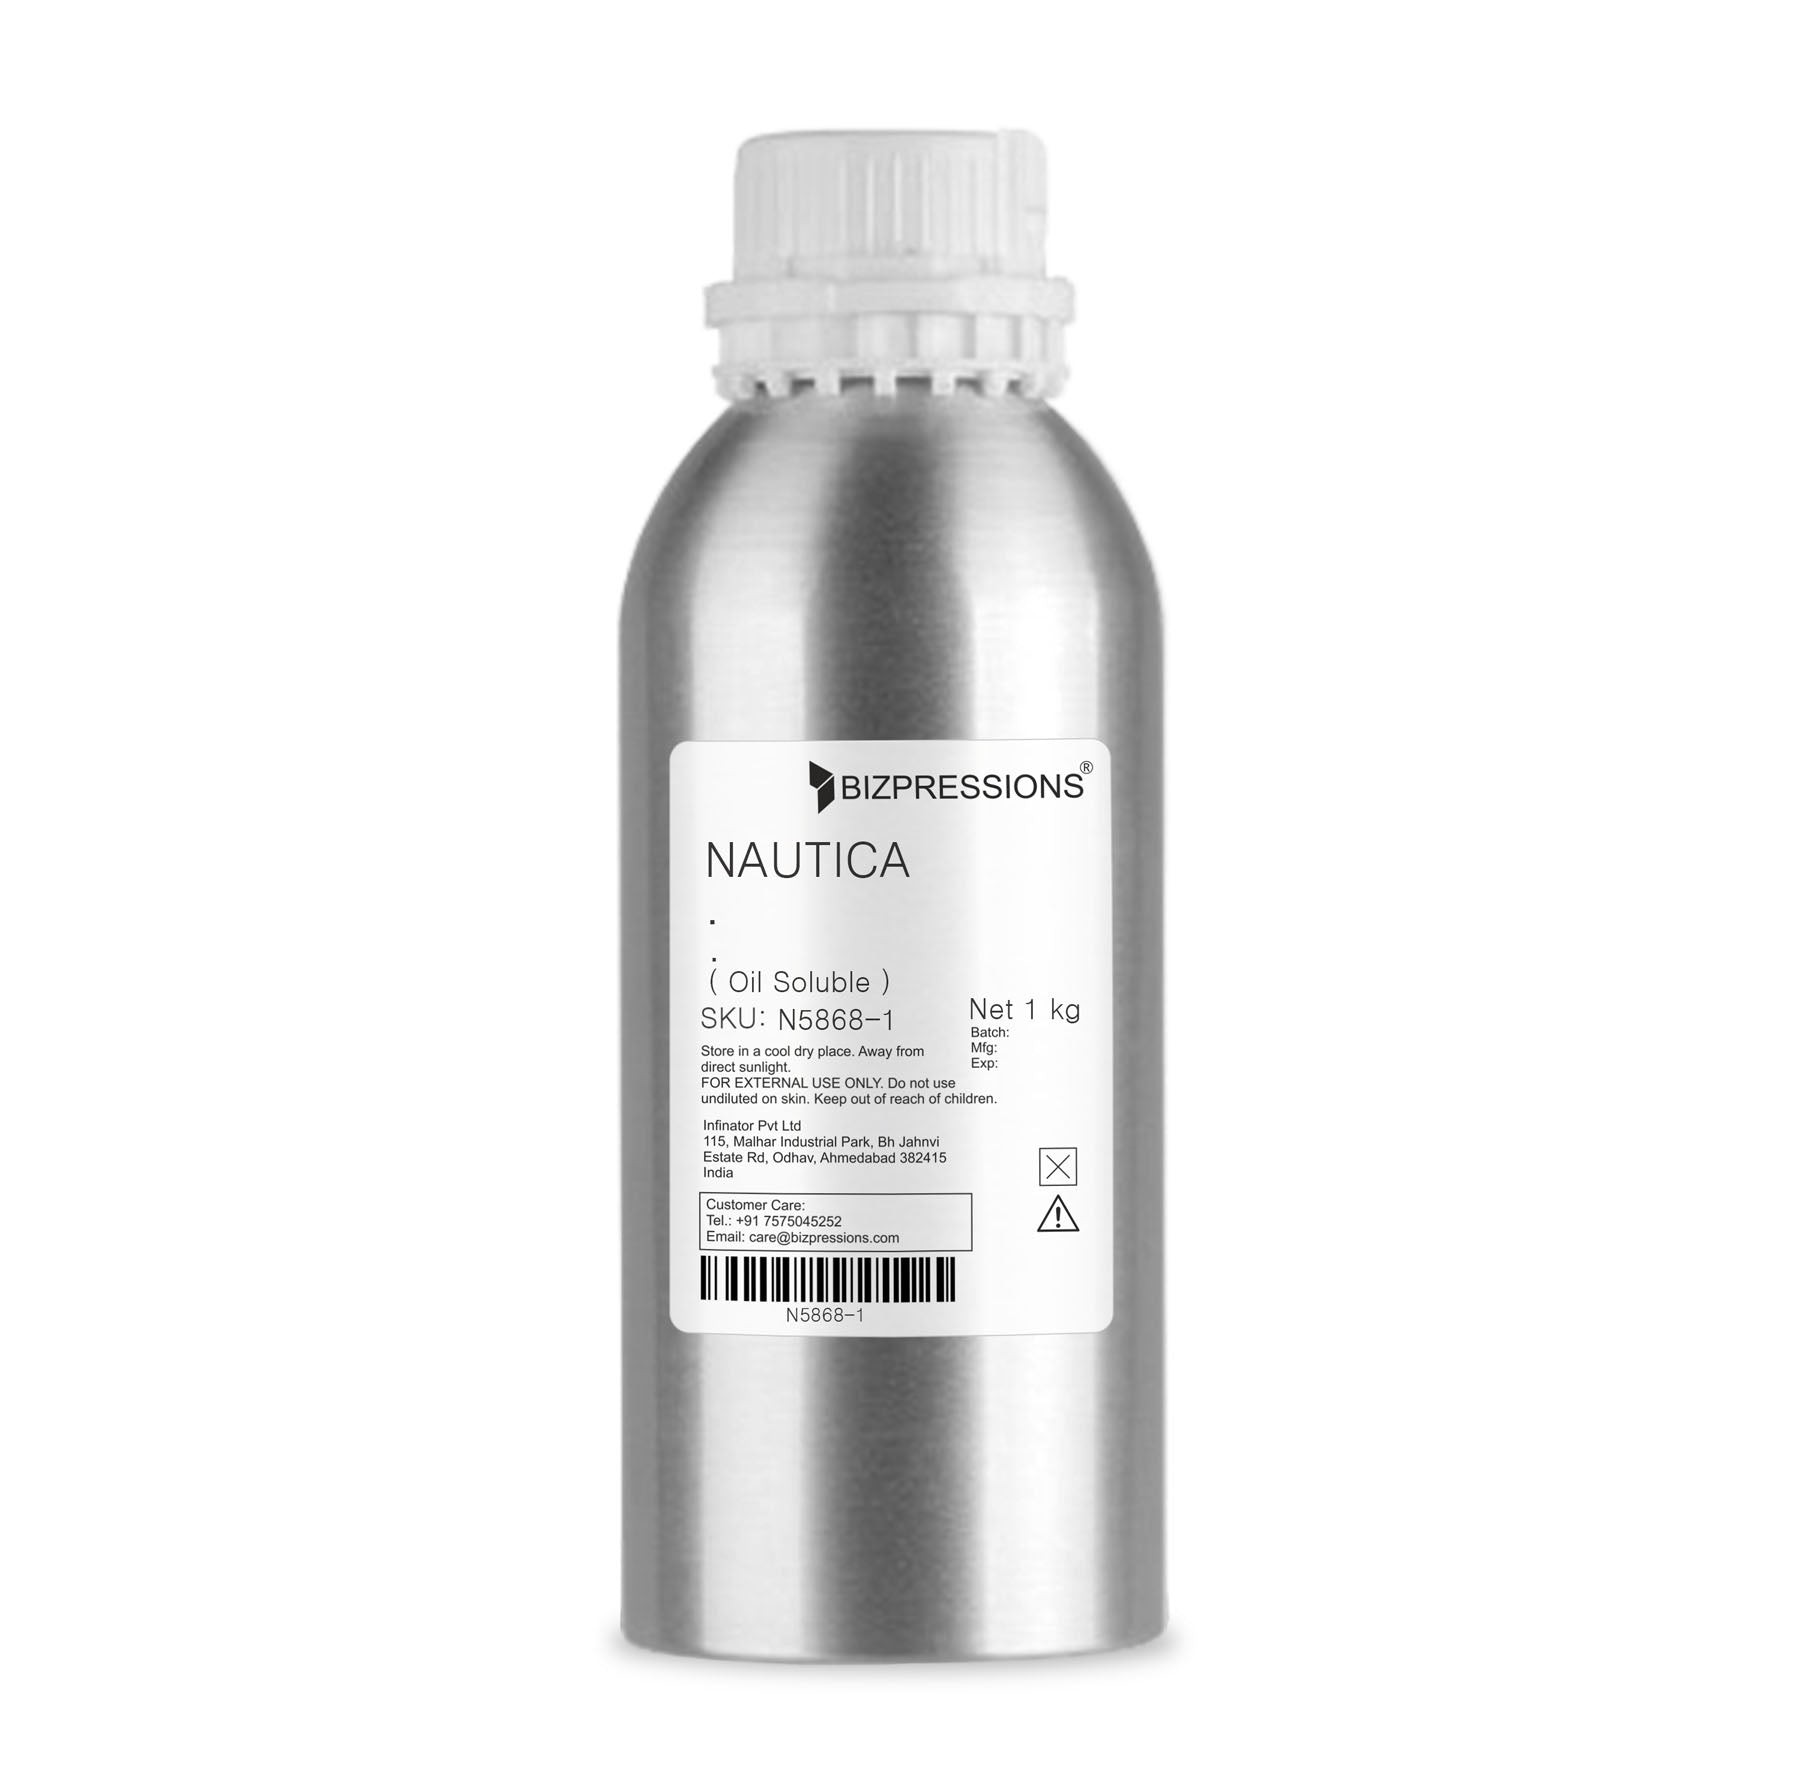 NAUTICA - Fragrance ( Oil Soluble ) - 1 kg